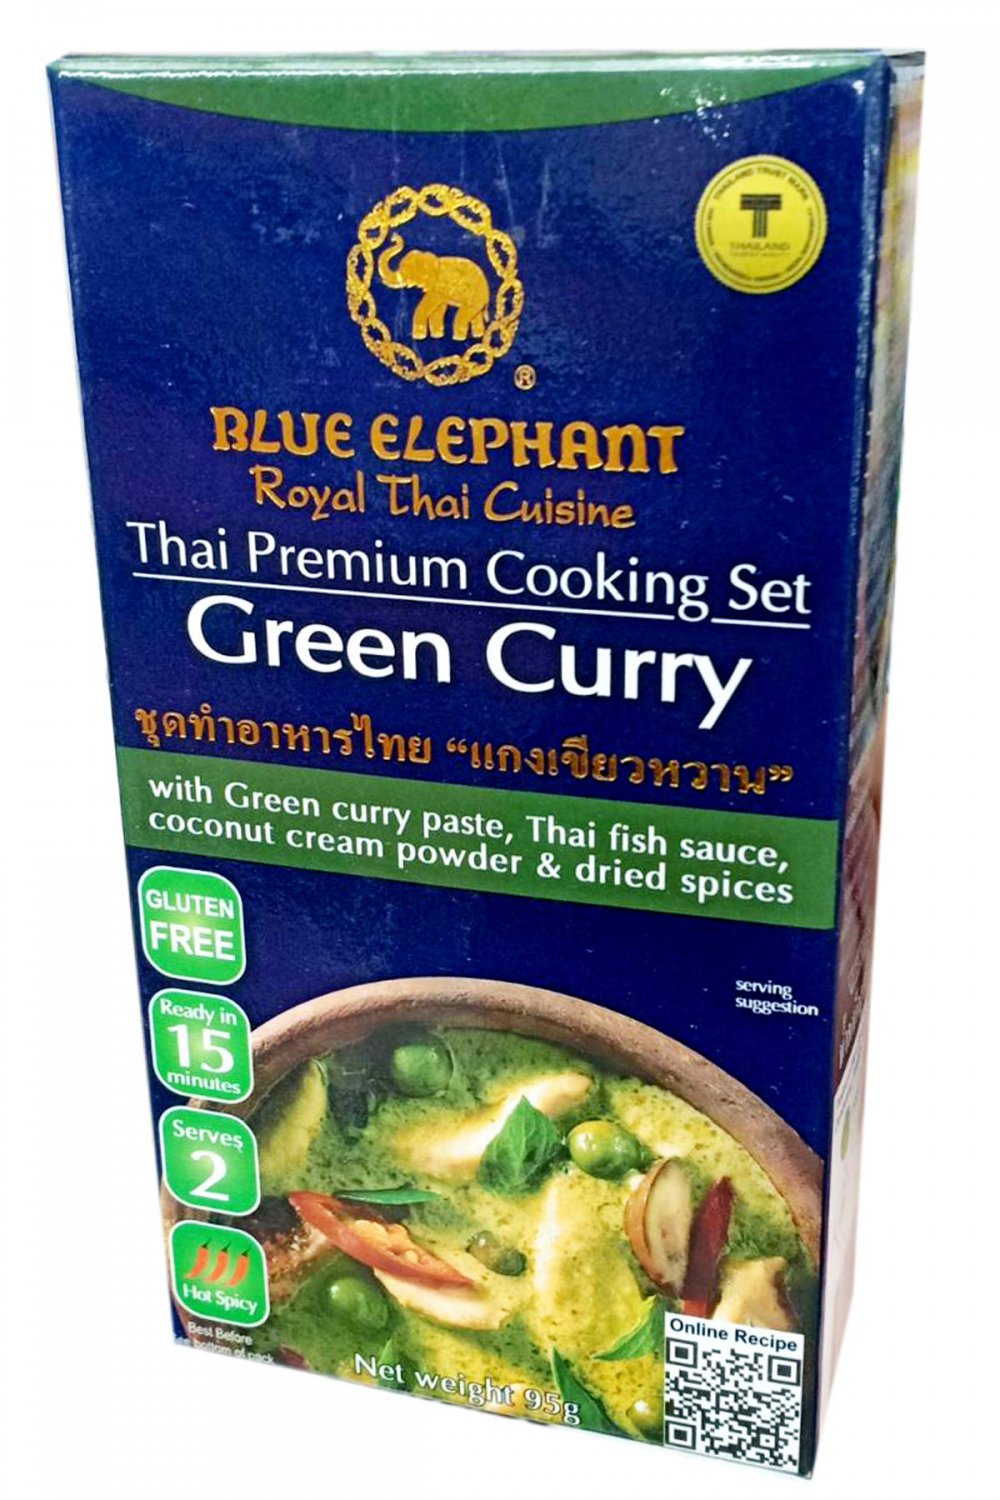 4x Blue Elephant brand Royal Thai Cuisine GREEN CURRY Cooking Set